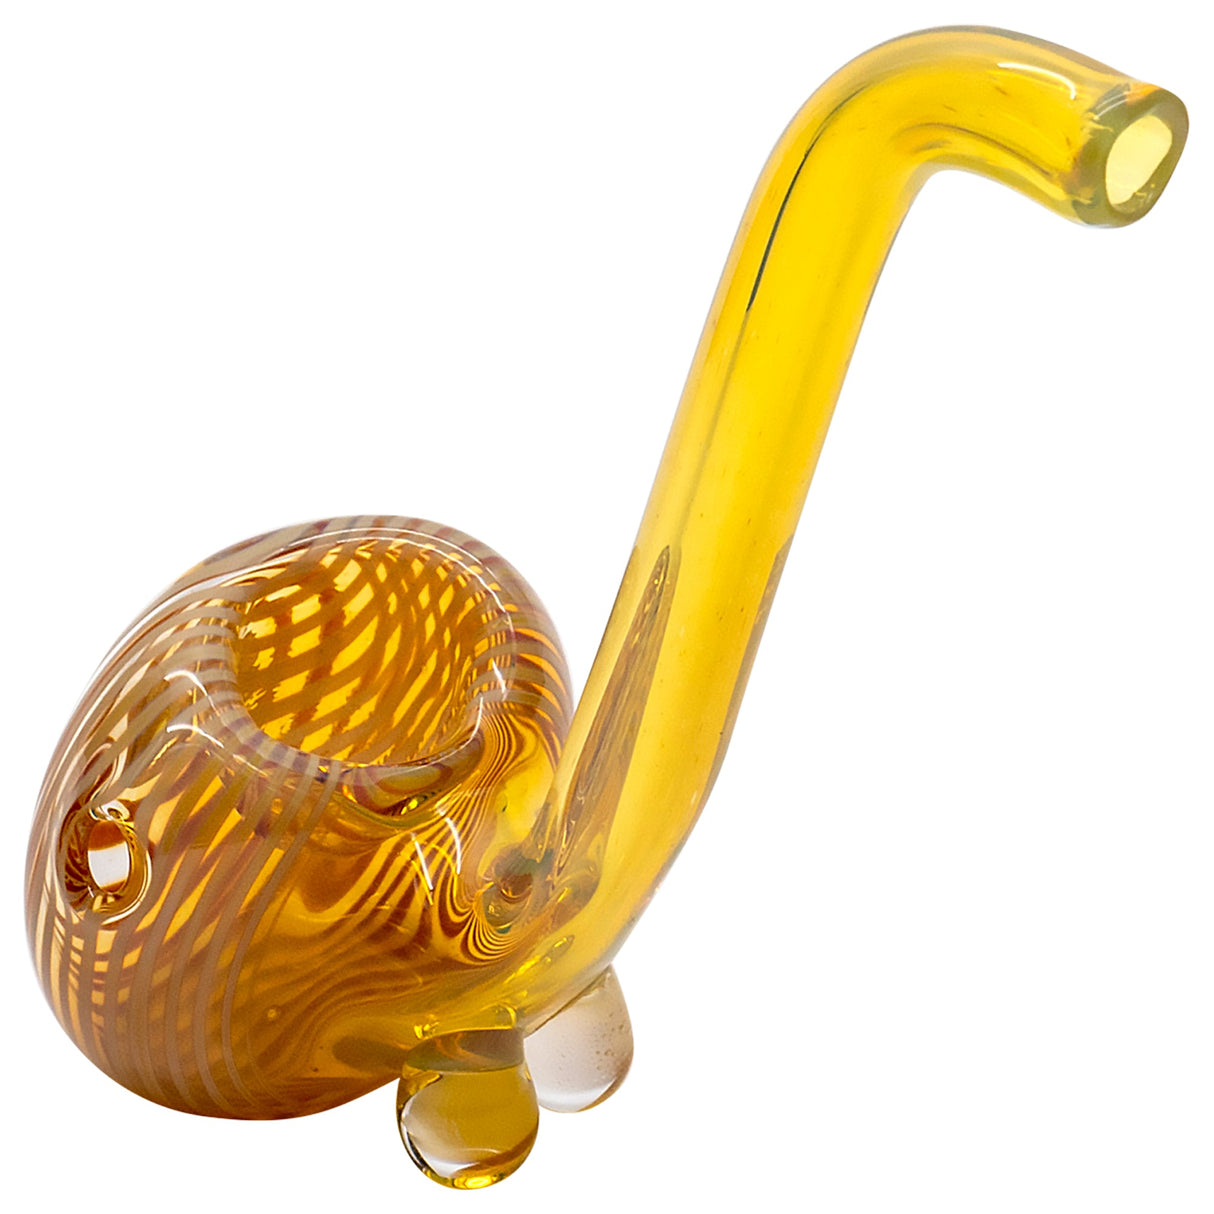 LA Pipes "Flaco" Skinny Glass Sherlock Pipe in Amber - Side View